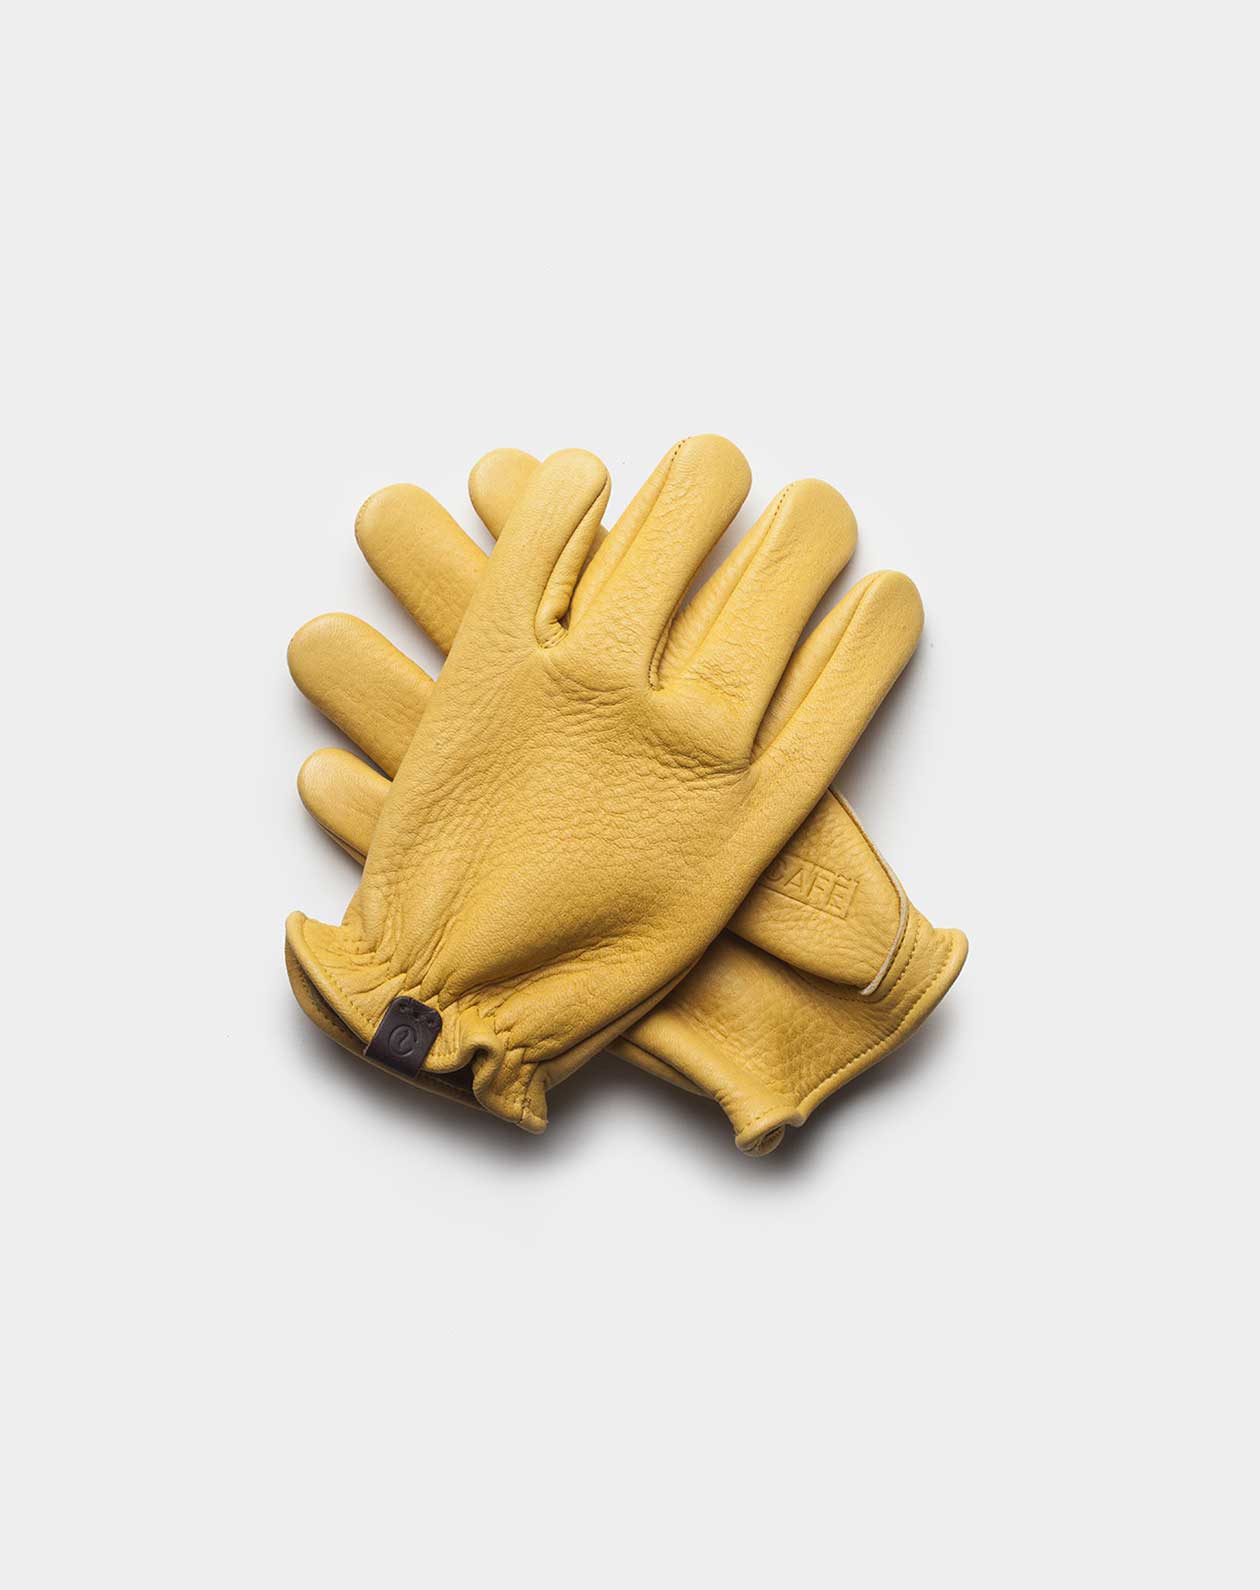 elkskin yellow gloves front